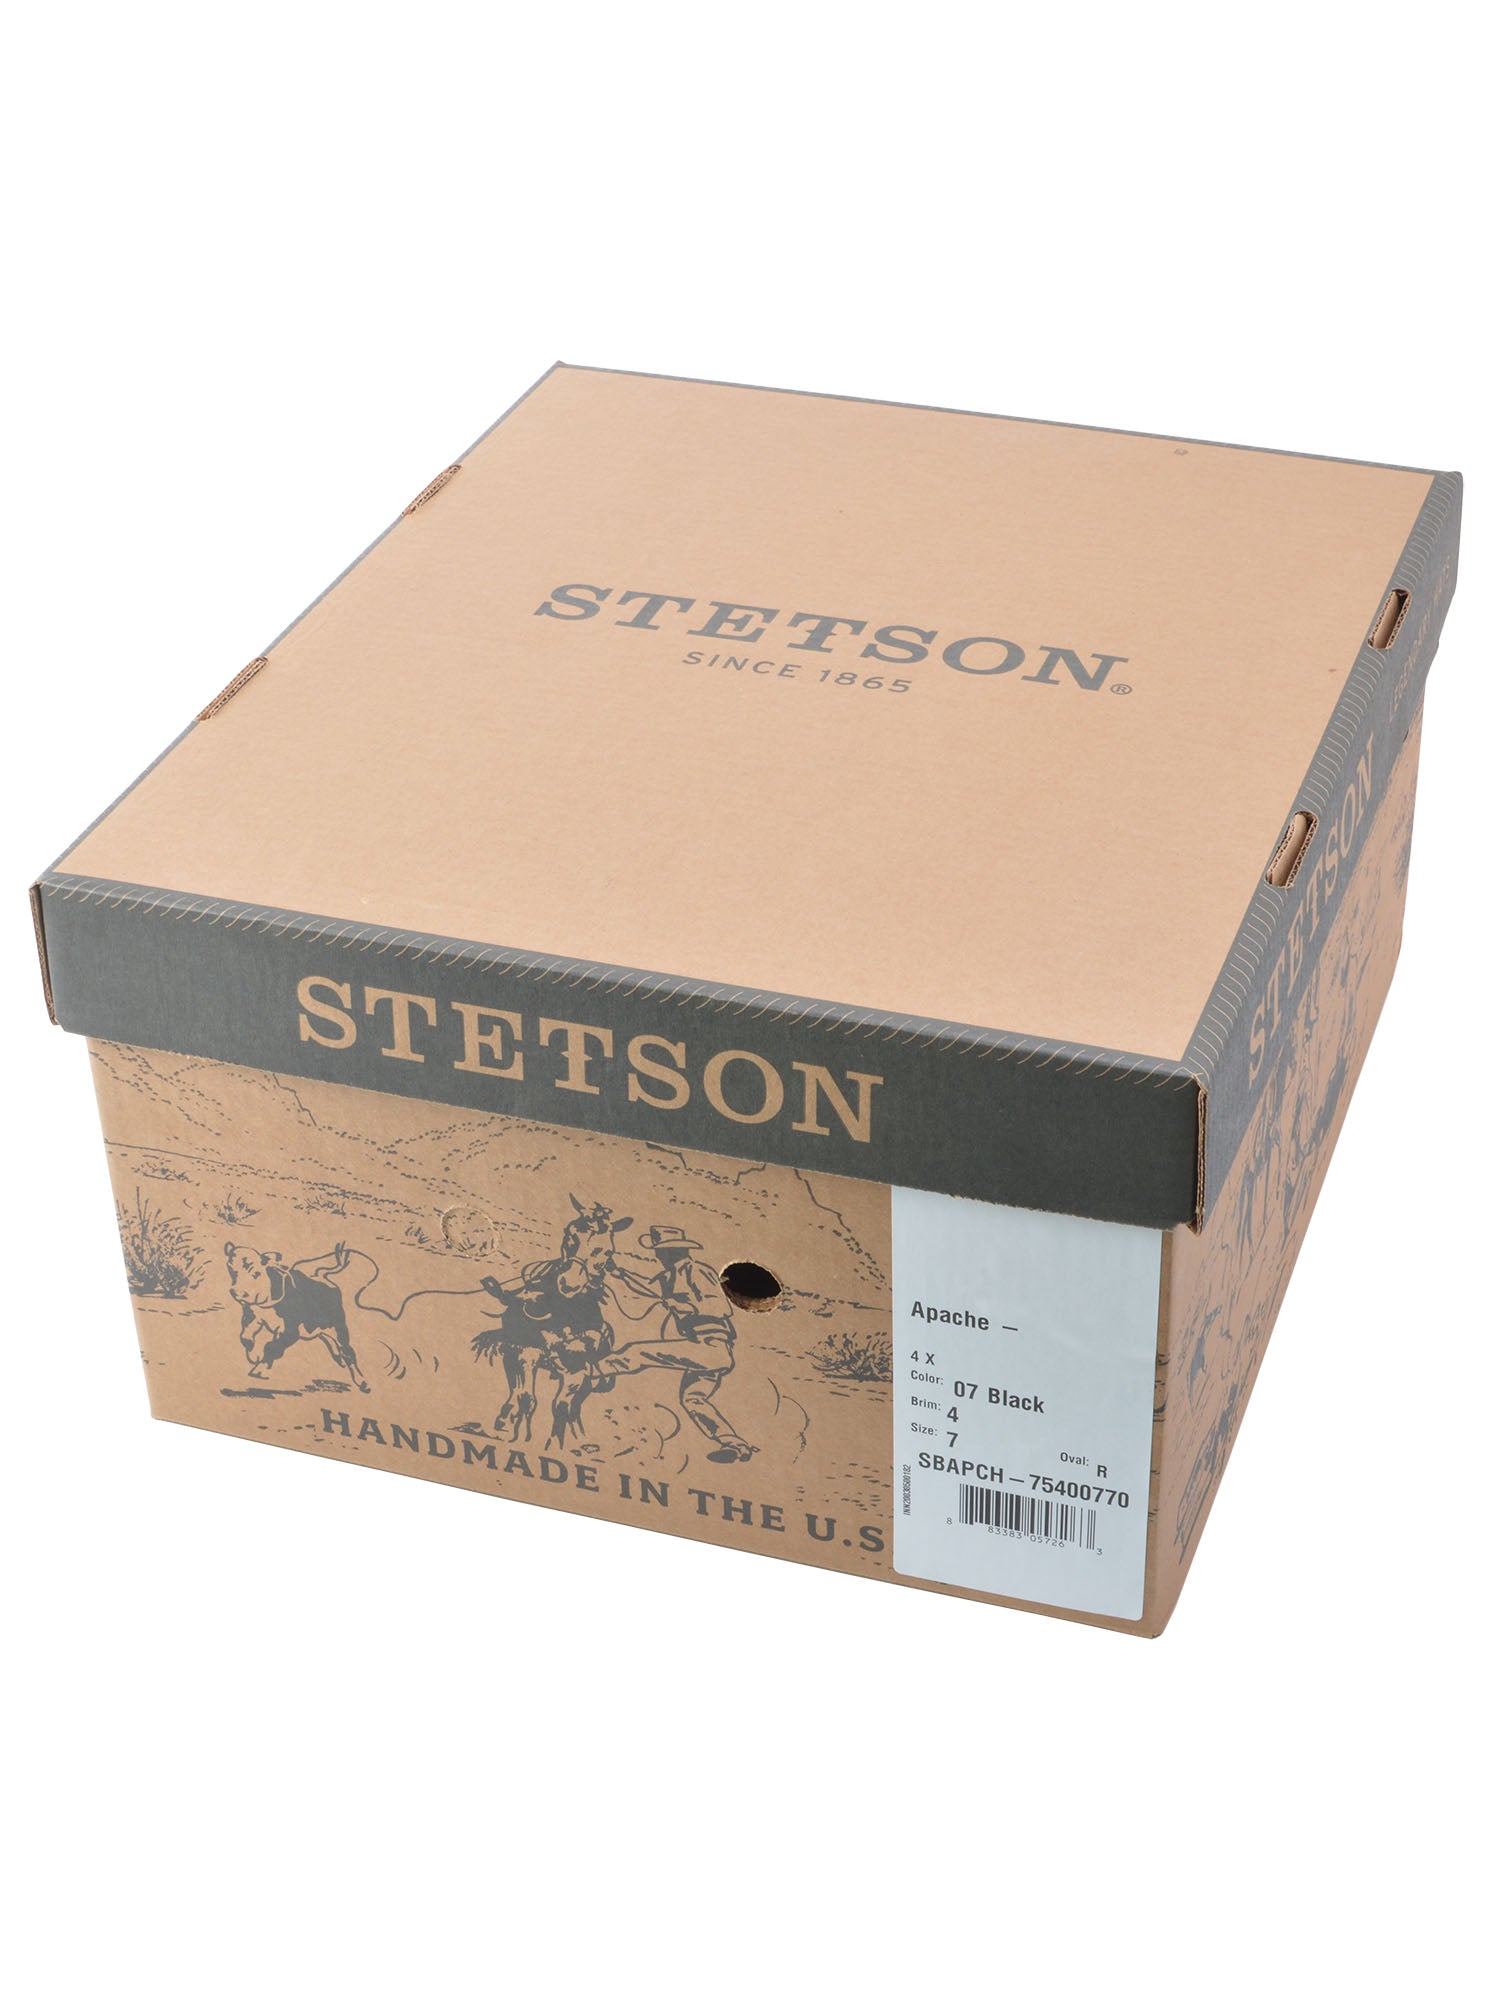 Hat Box Stetson